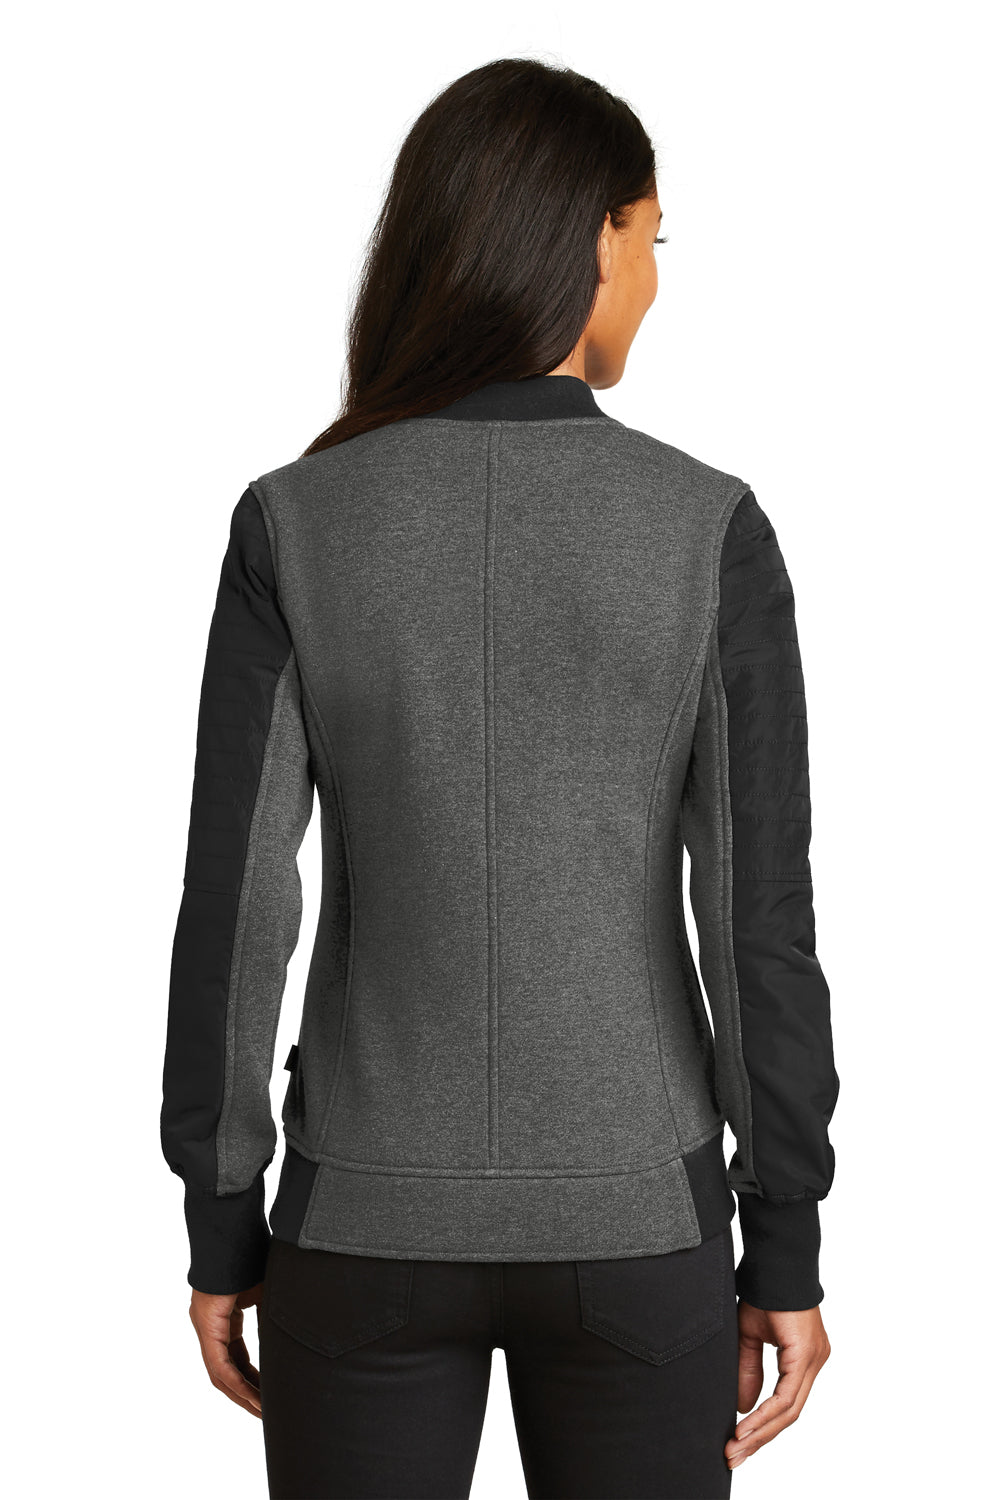 Ogio LOG506 Womens Crossbar Water Resistant Fleece Full Zip Jacket Heather Grey/Black Back